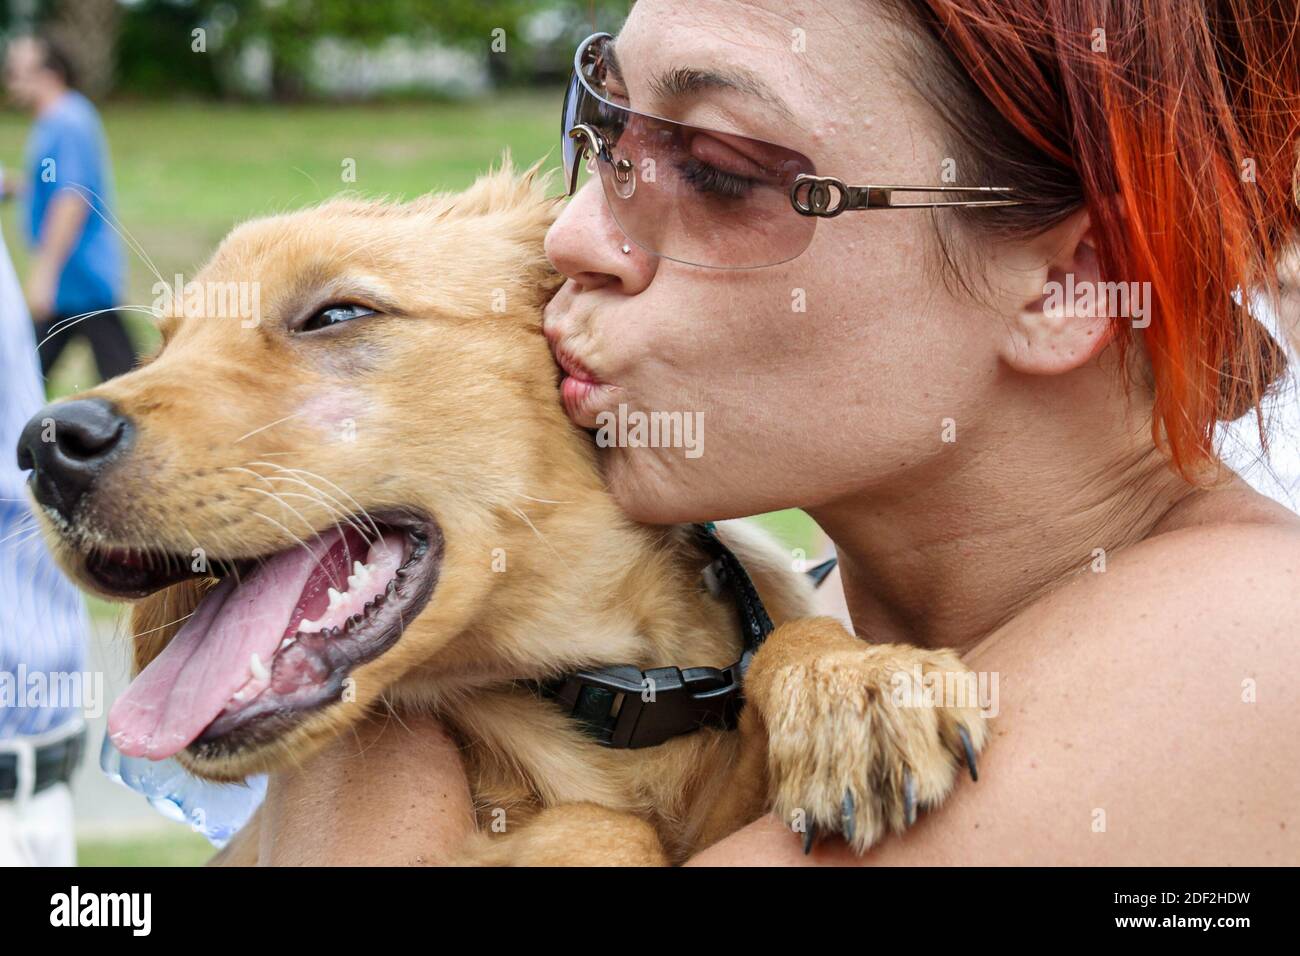 Miami Florida,Coconut Grove Peacock Park,Hispanic woman female dog pet holding kissing companion, Stock Photo